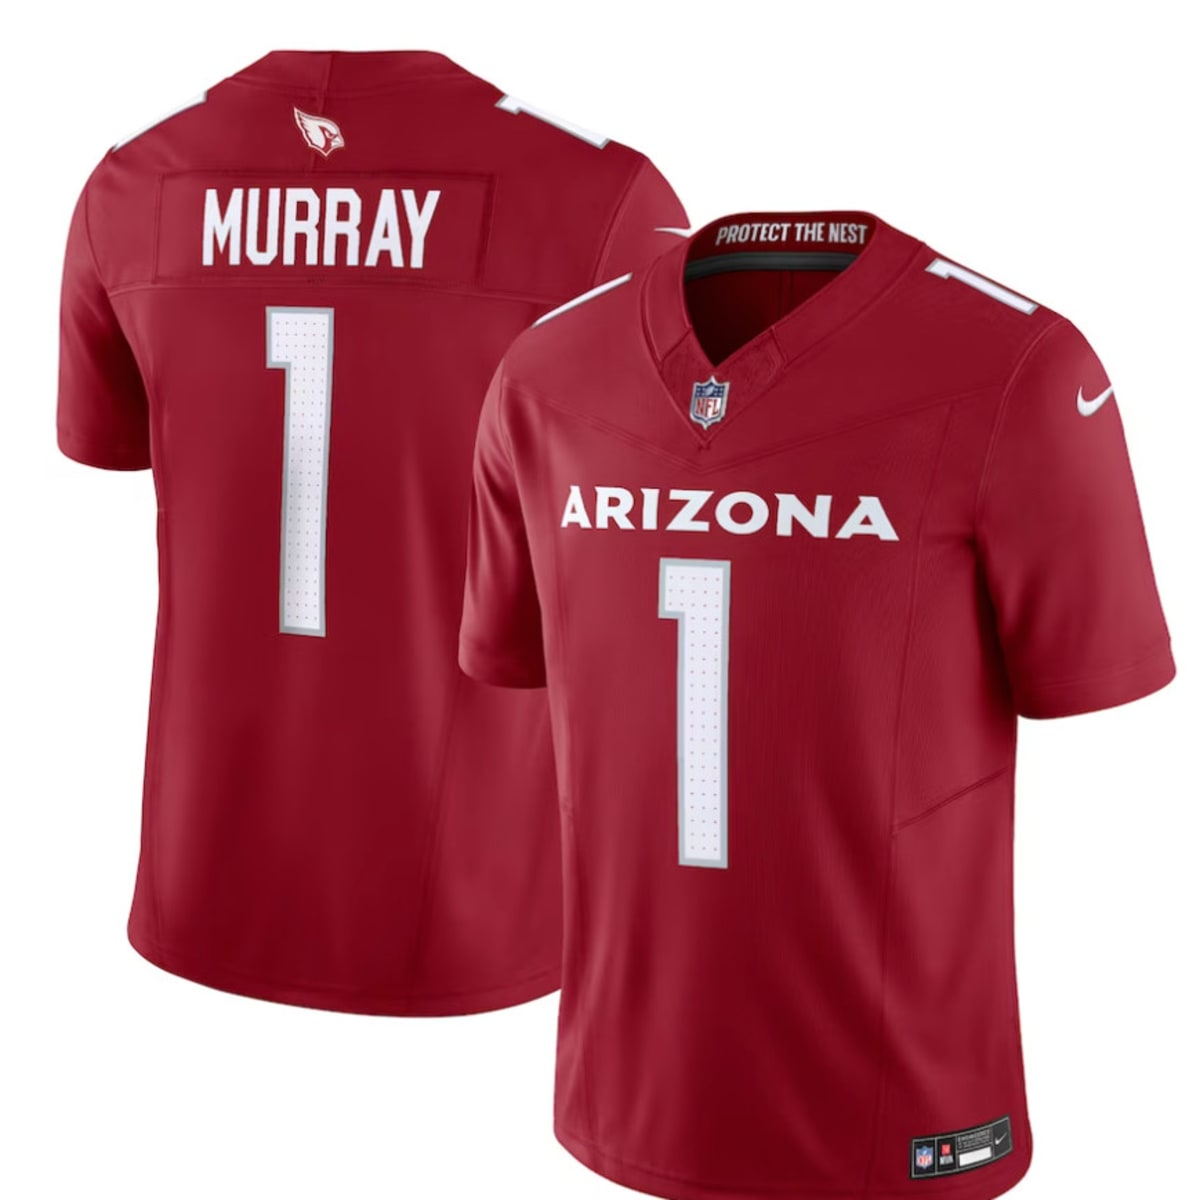 Arizona Cardinals unveil new uniforms ahead of 2023 season